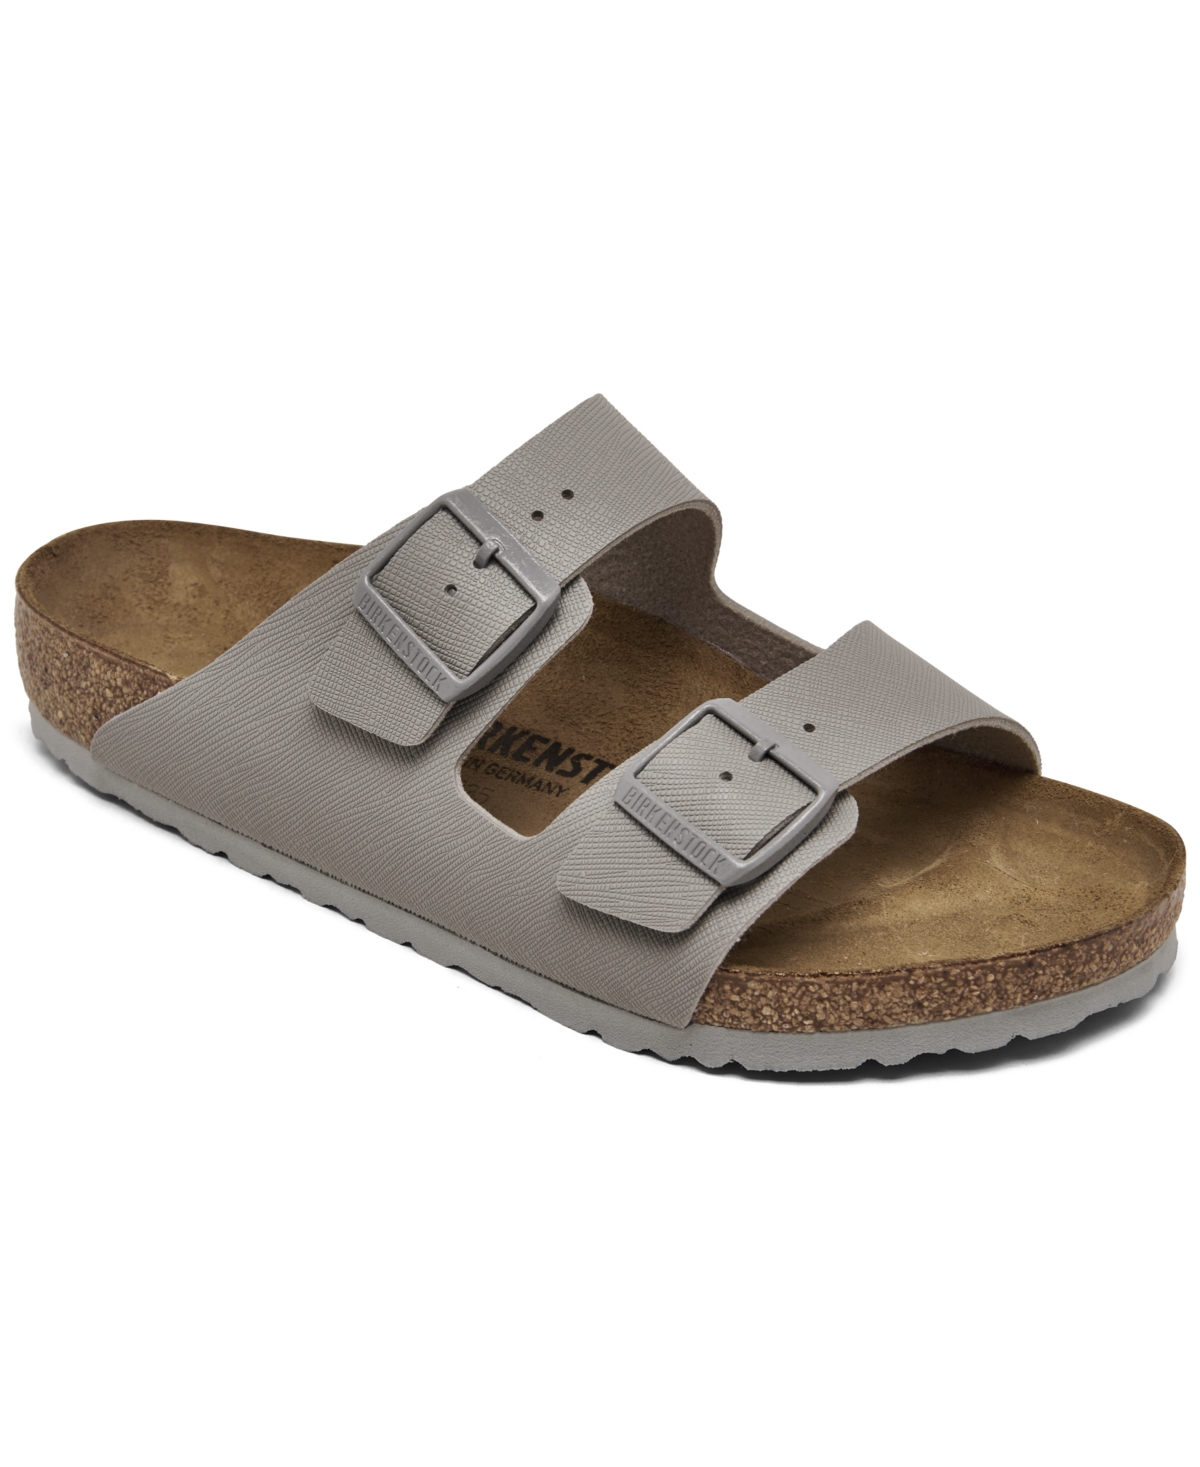 Men's Arizona Birko-Flor Saffiano Adjustable Slide Sandals from Finish Line - Stone Coin